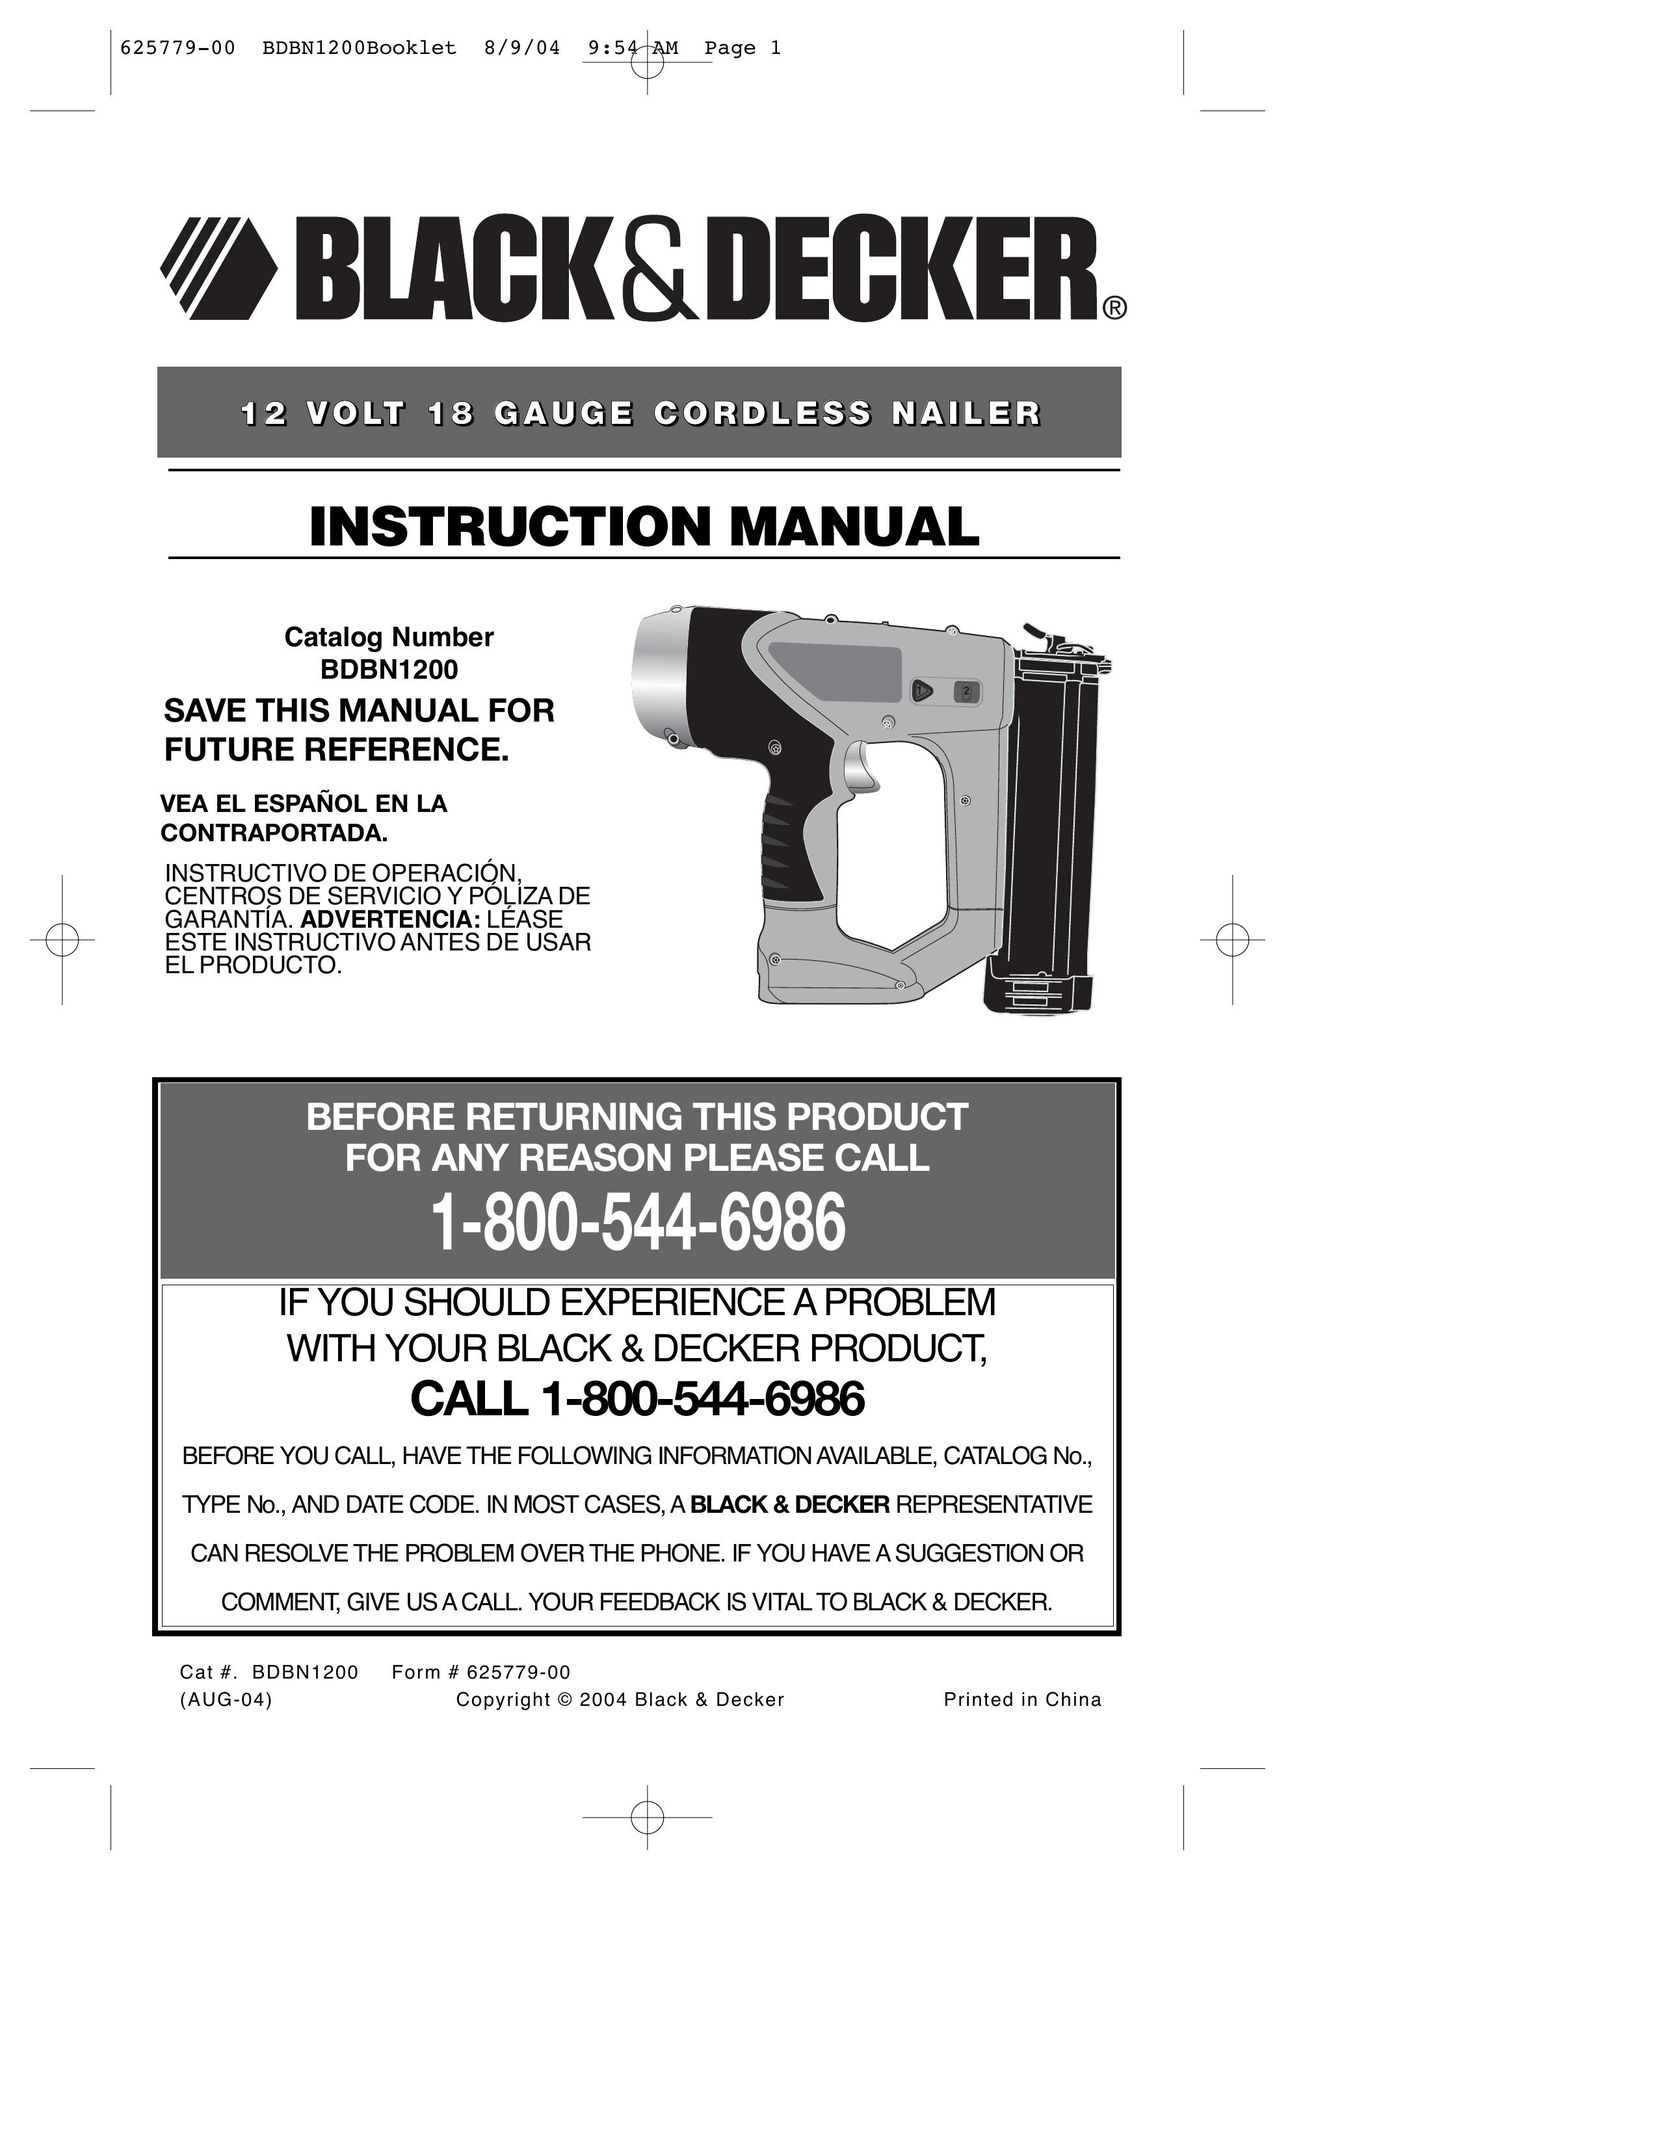 Black & Decker BDBN1200 Nail Gun User Manual